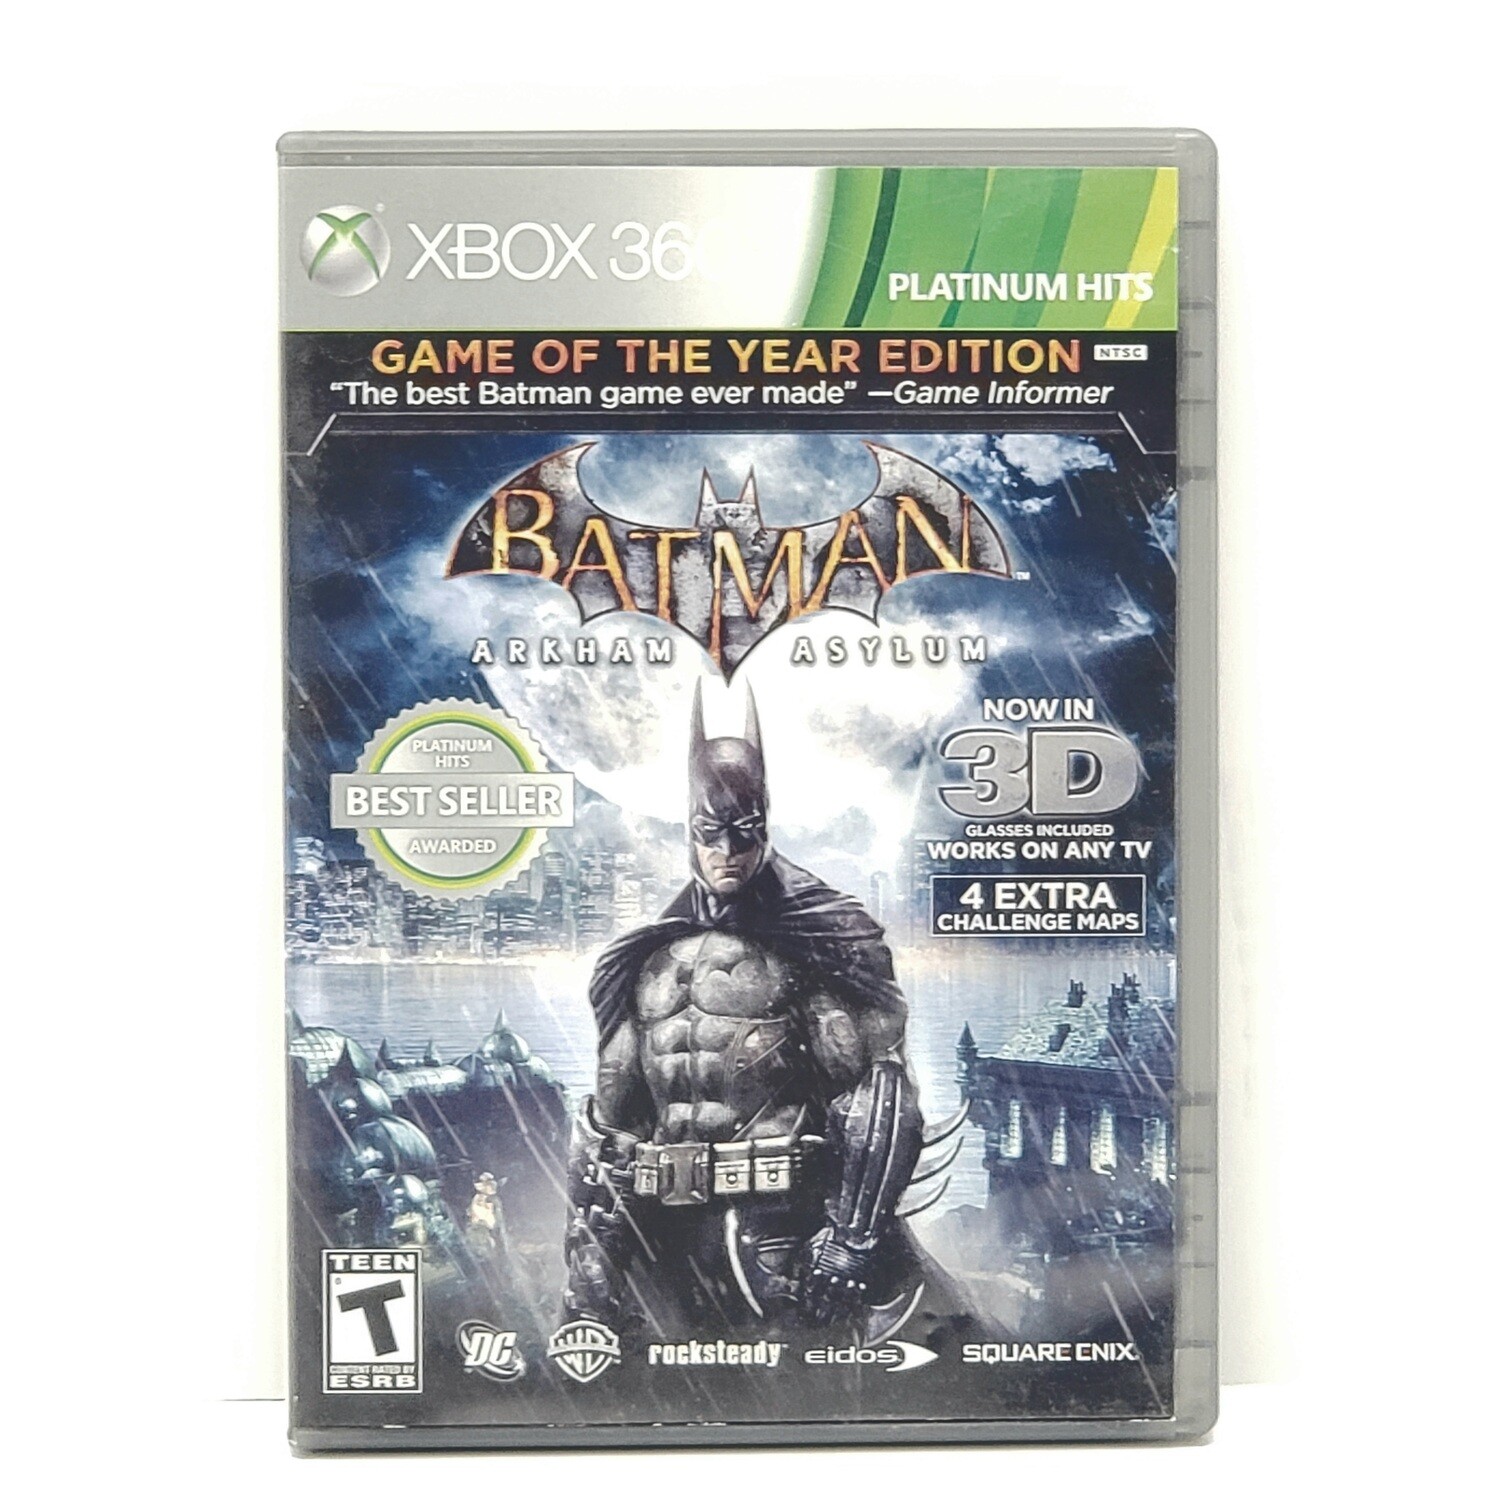 Batman Arkham Asylum: Game of the Year Edition